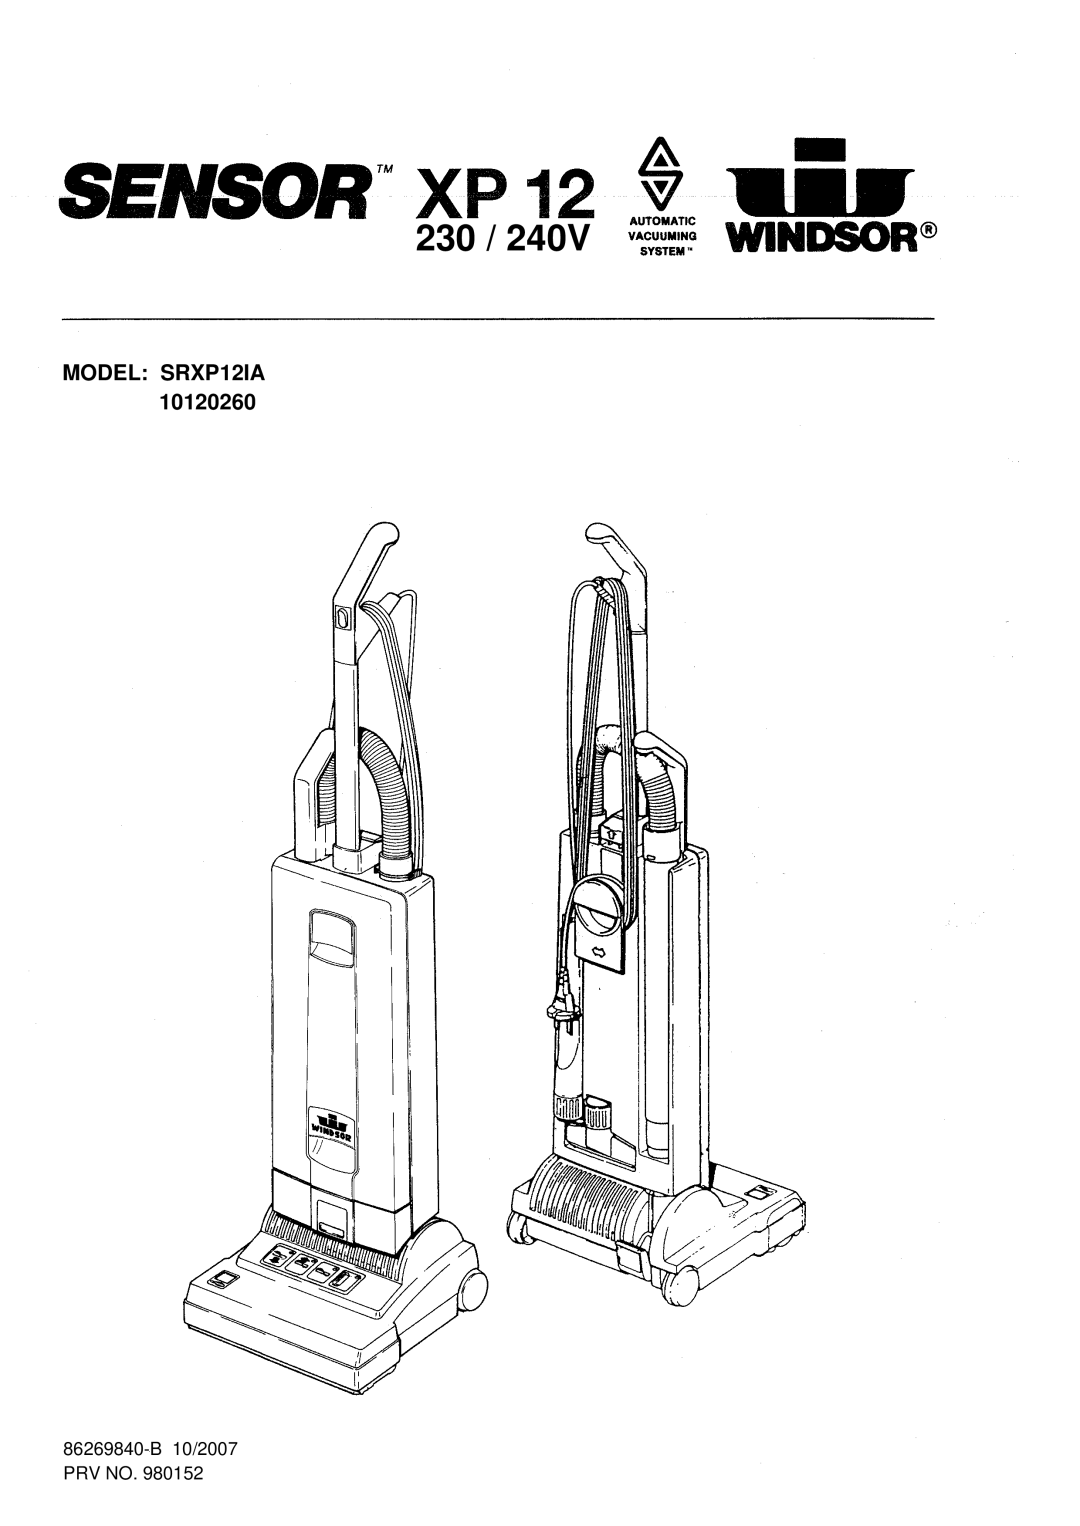 Windsor 10120260 manual 230, MODEL SRXP12IA, 86269840-B10/2007 PRV NO 